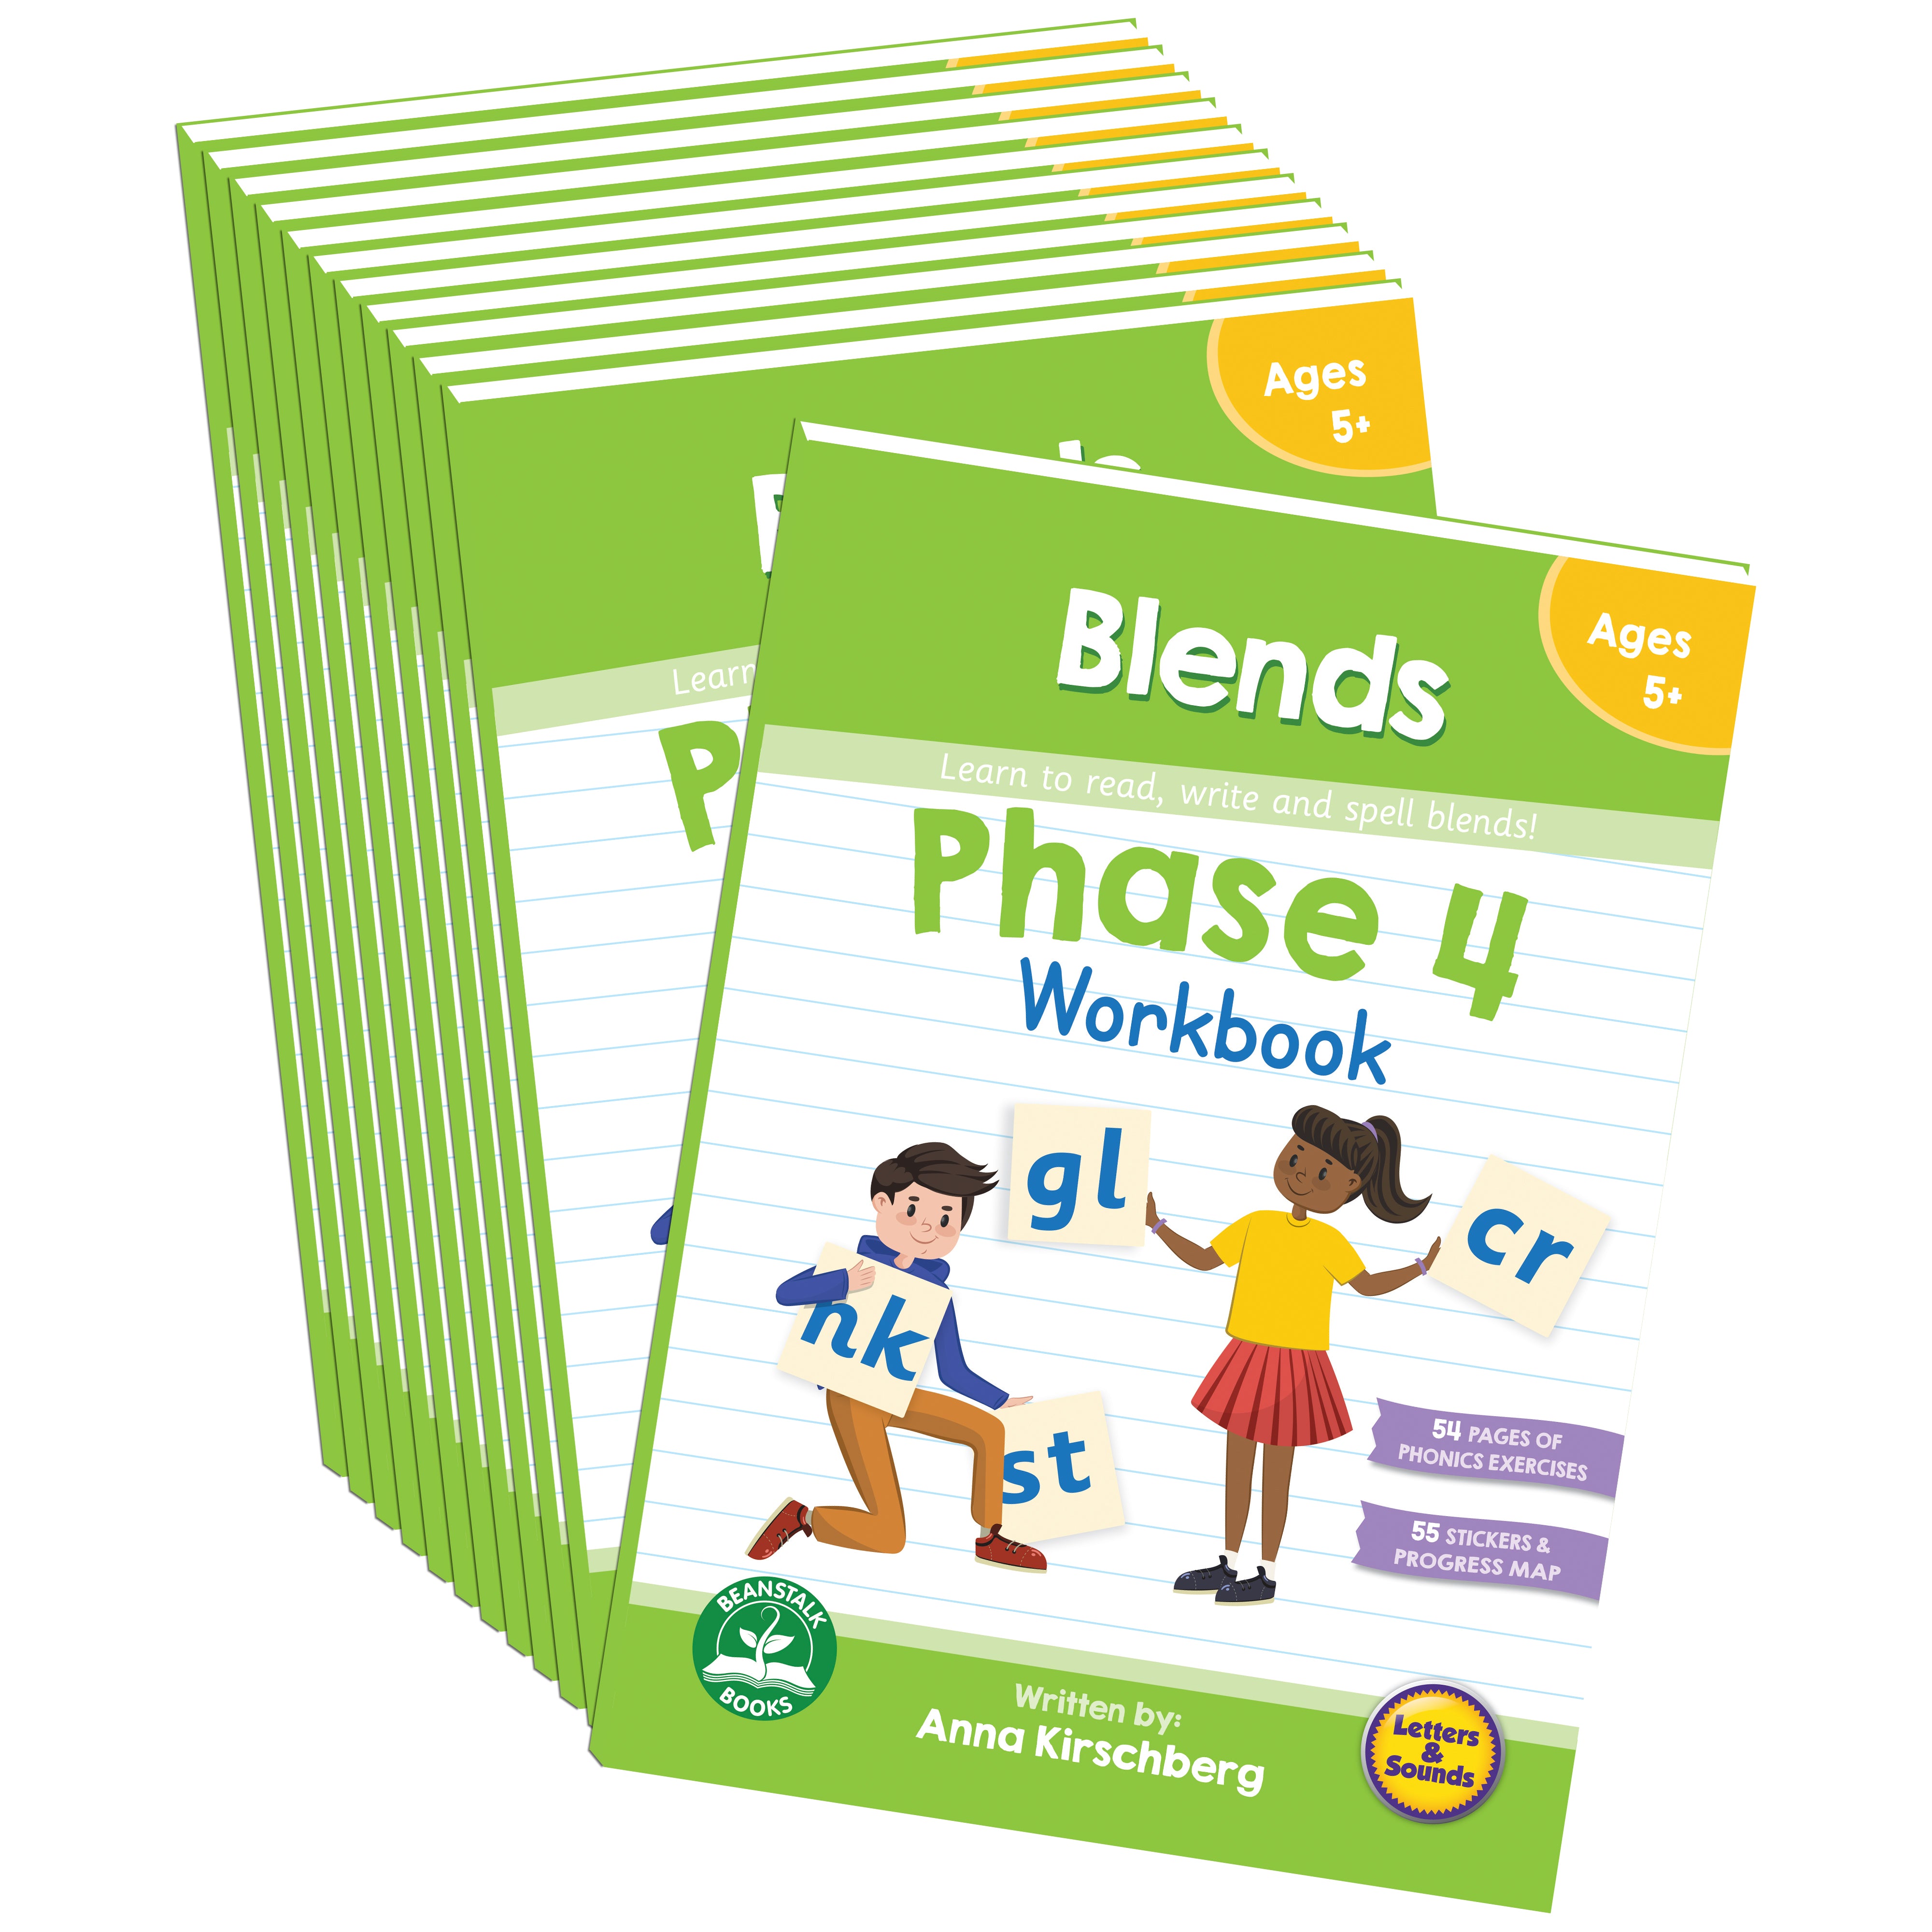 Phase 4 Blends Workbook - 12 Pack